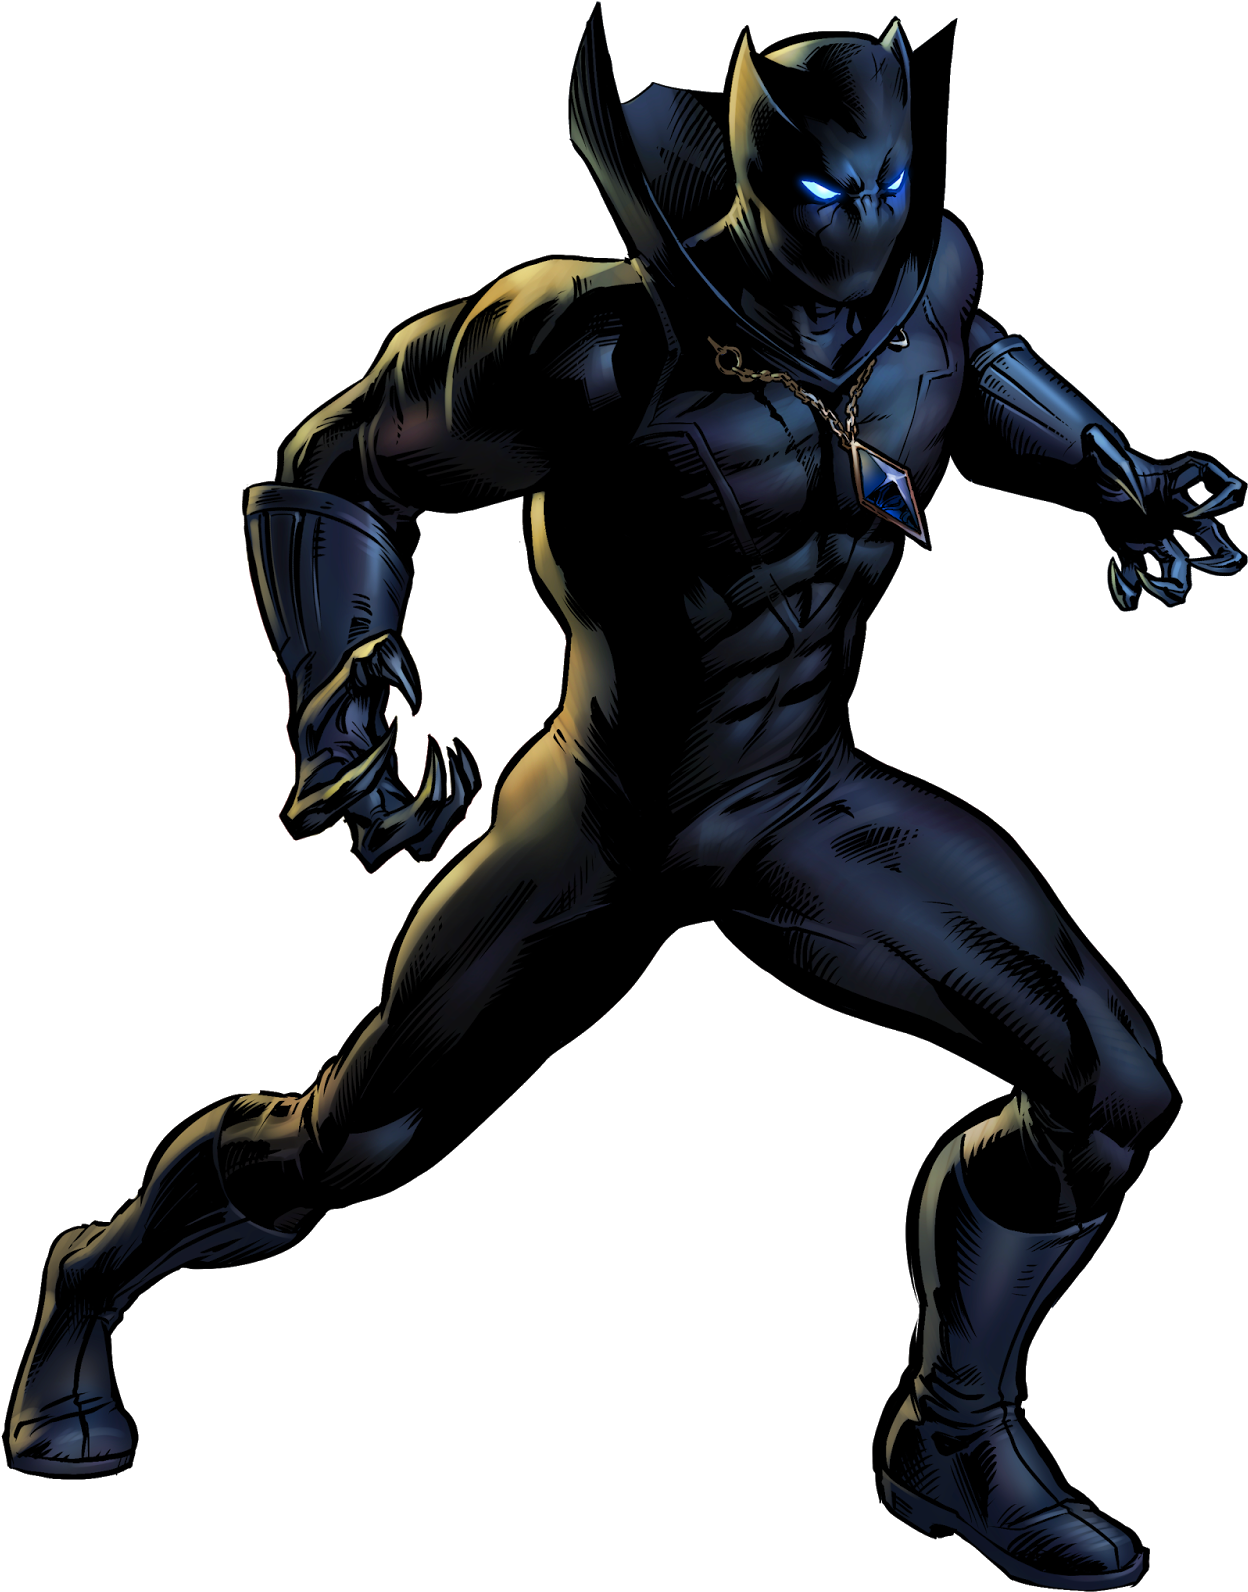 Black Panther Captain America Superhero Marvel Comics - Avengers Alliance 2 Black Panther (1259x1600)